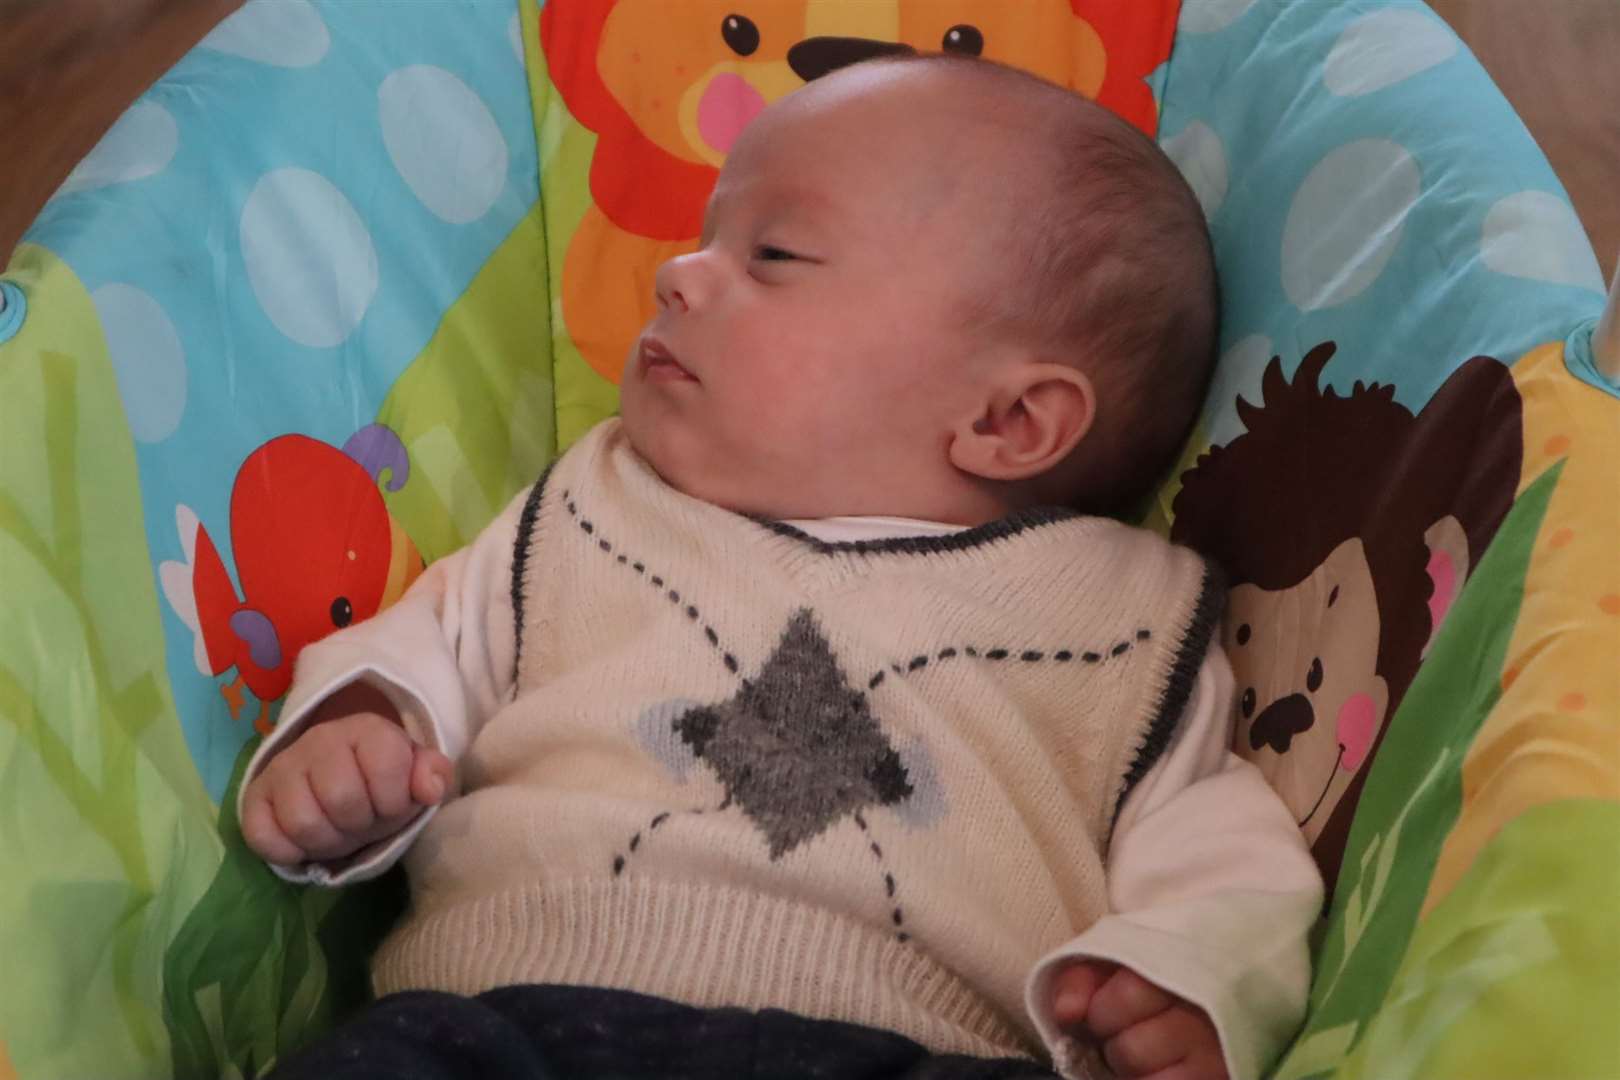 Miracle baby Alexandru-Loachim Dutuc at home in Queenborough